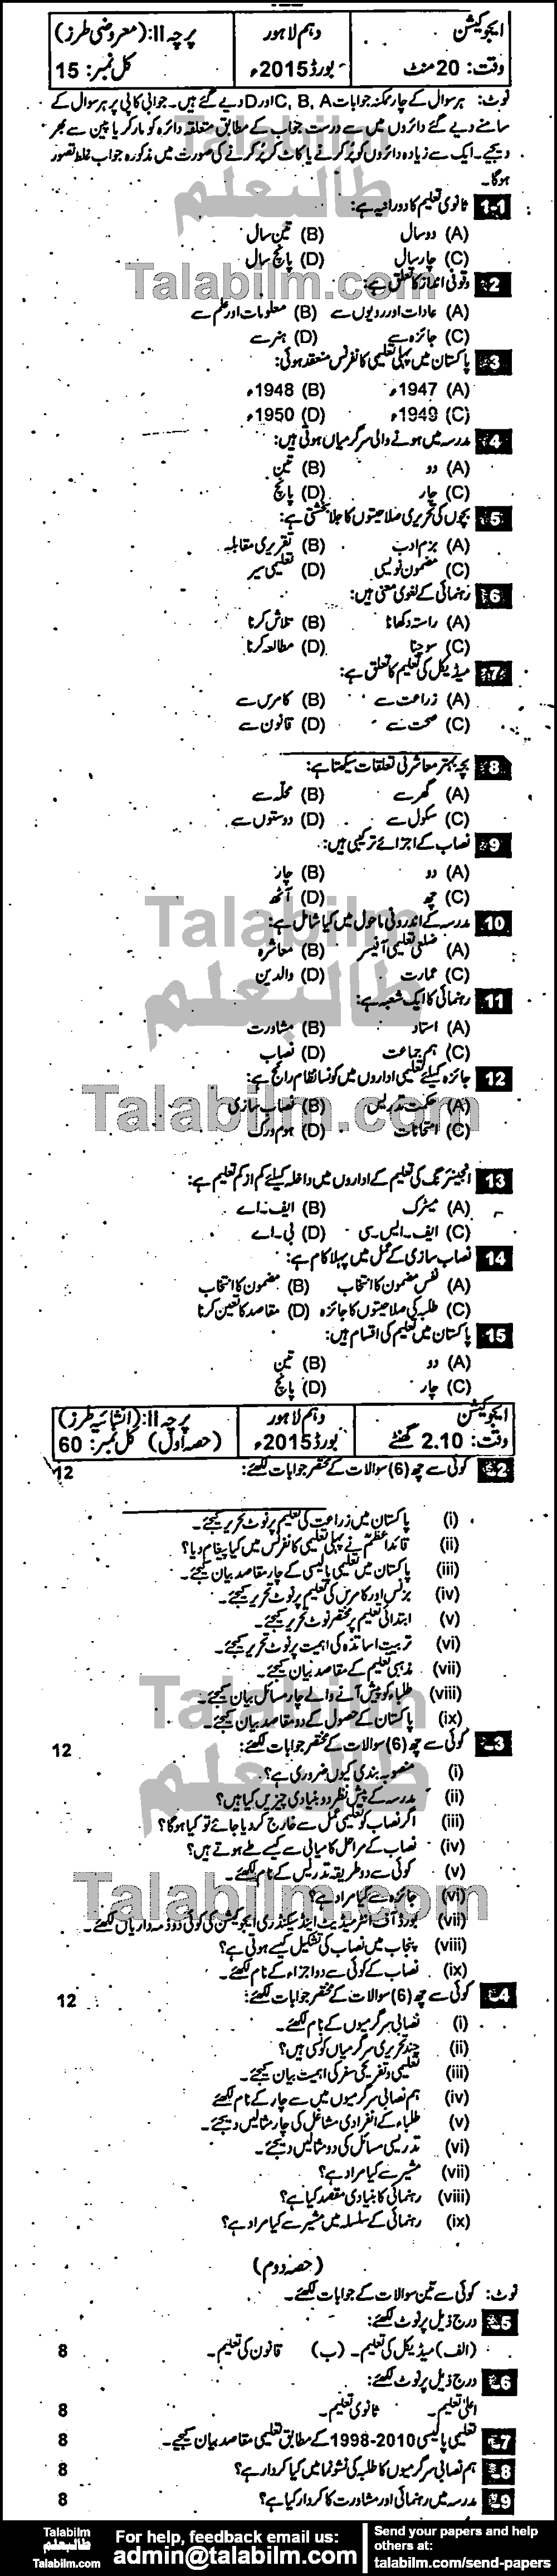 Education 0 past paper for Urdu Medium 2015 Group-I